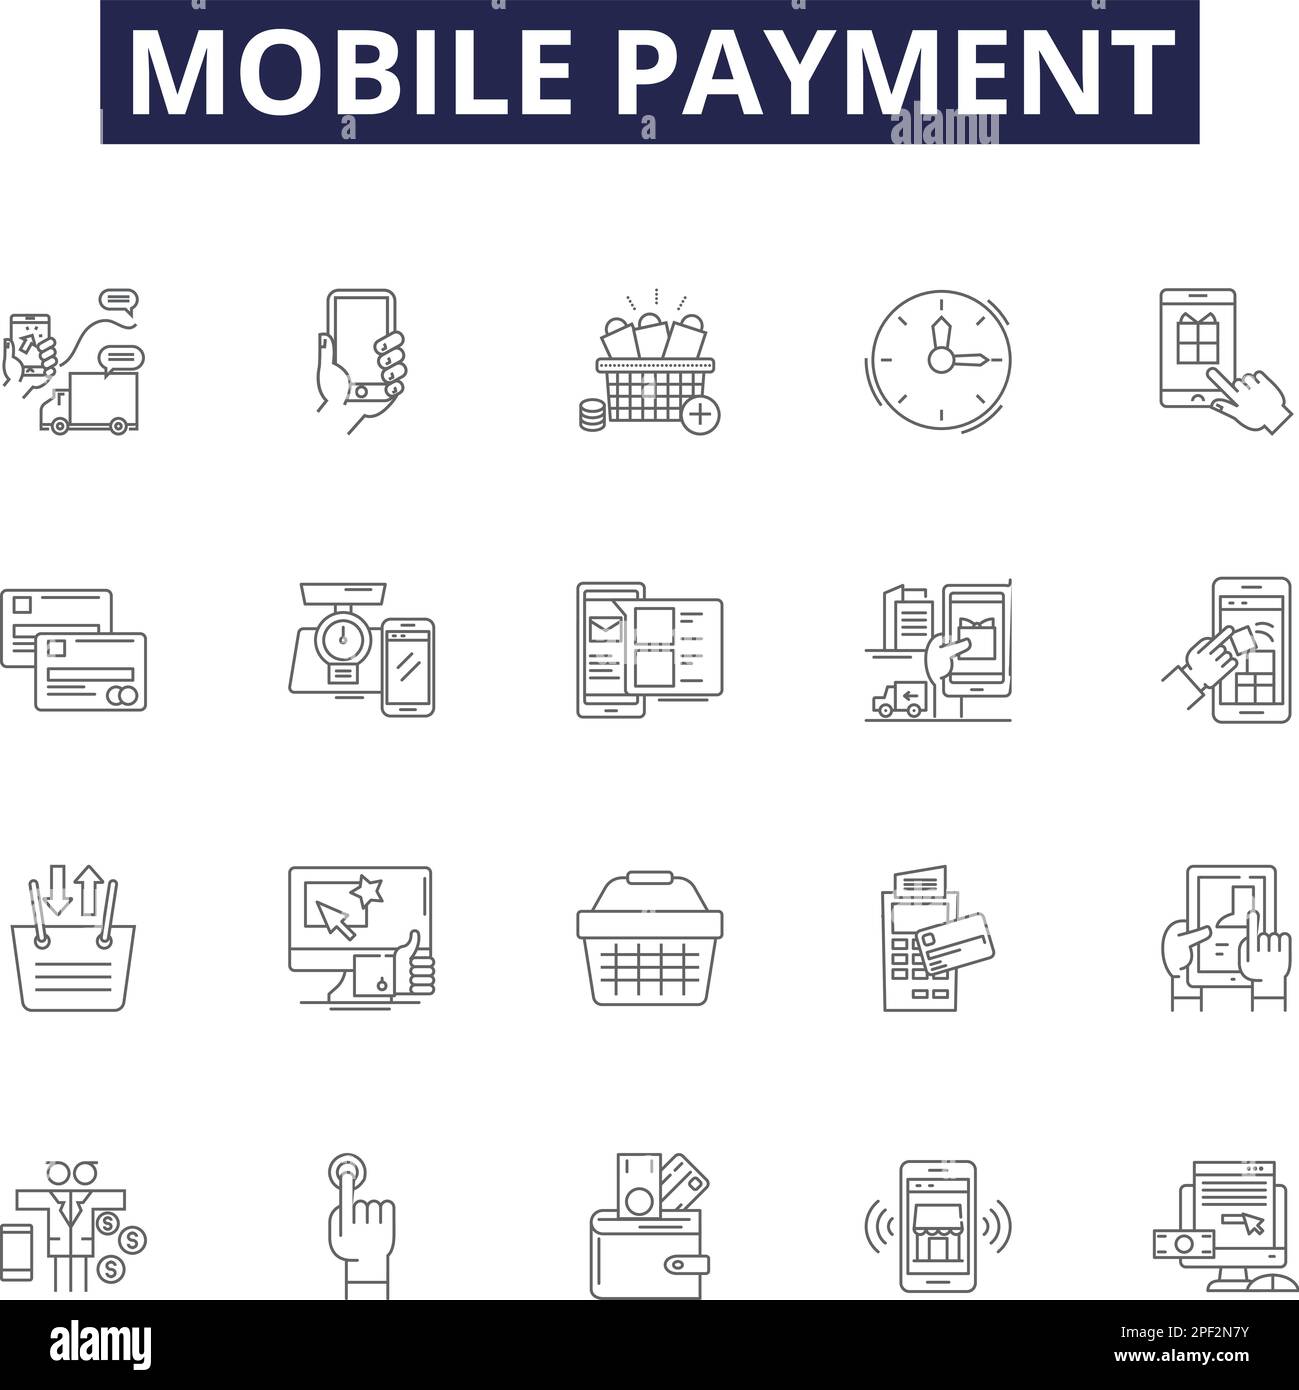 Mobile payment line vector icons and signs. Wallet, mCommerce, NFC, Cashless, Biometrics, Fingerprint, Tokenization, Pay-Via-Phone outline vector Stock Vector